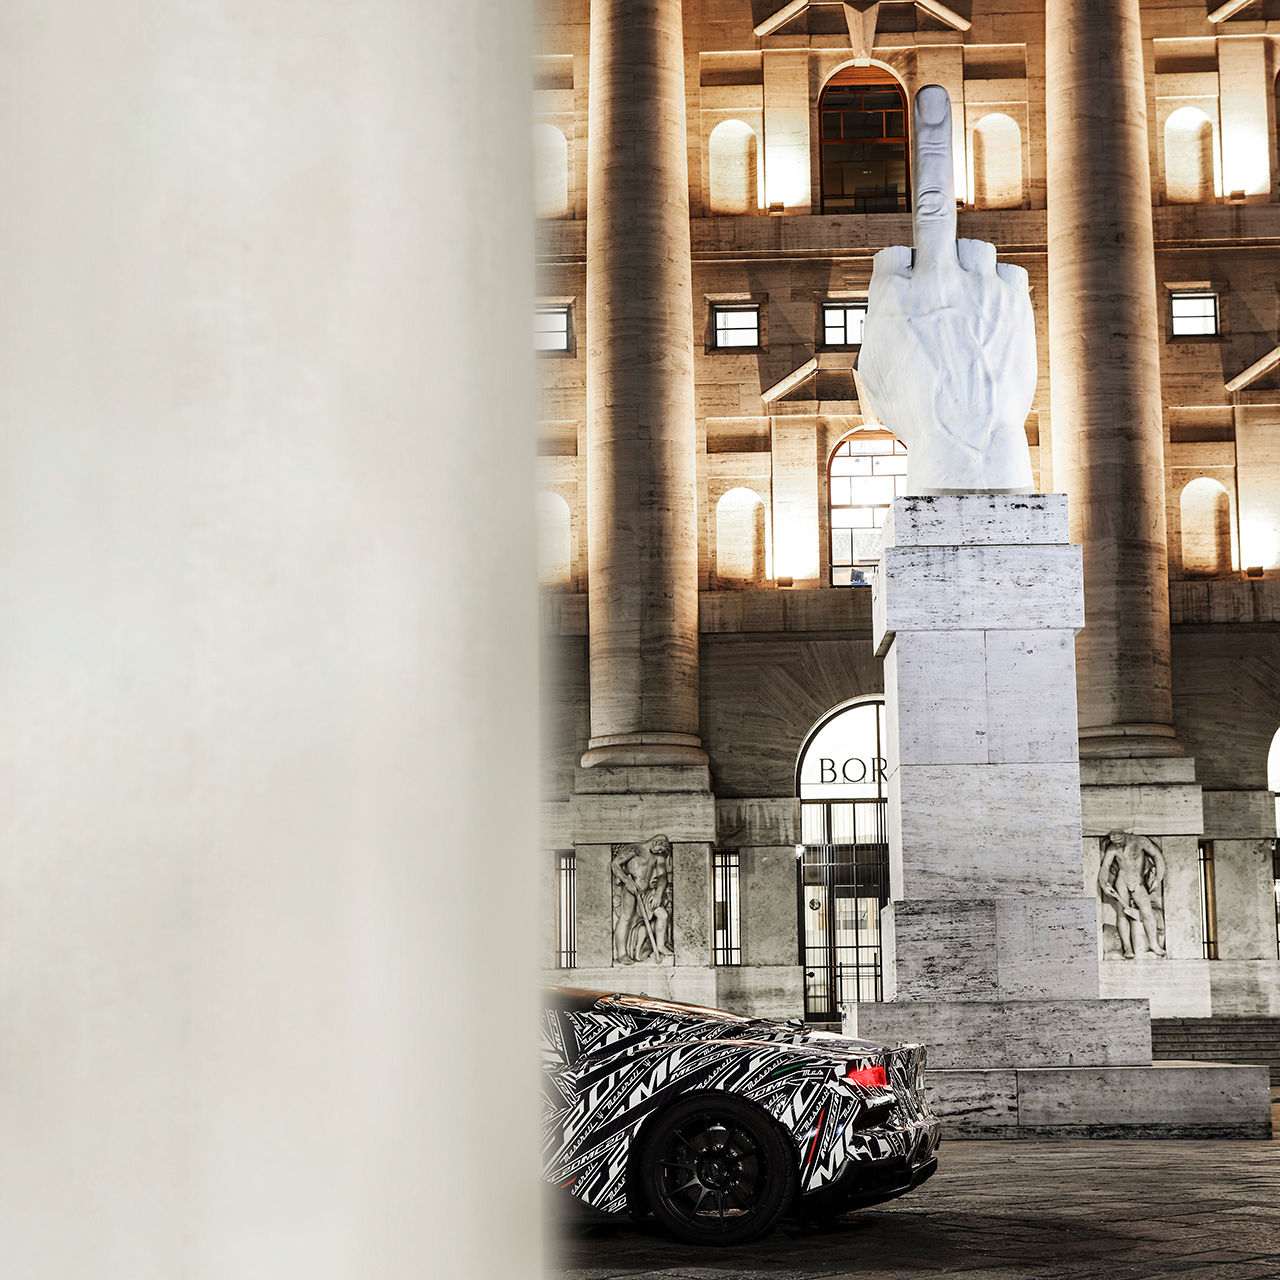 New Maserati MC20 (2020) super sports car prototype testing in Milan, next to Cattelan's L.O.V.E sculpture.